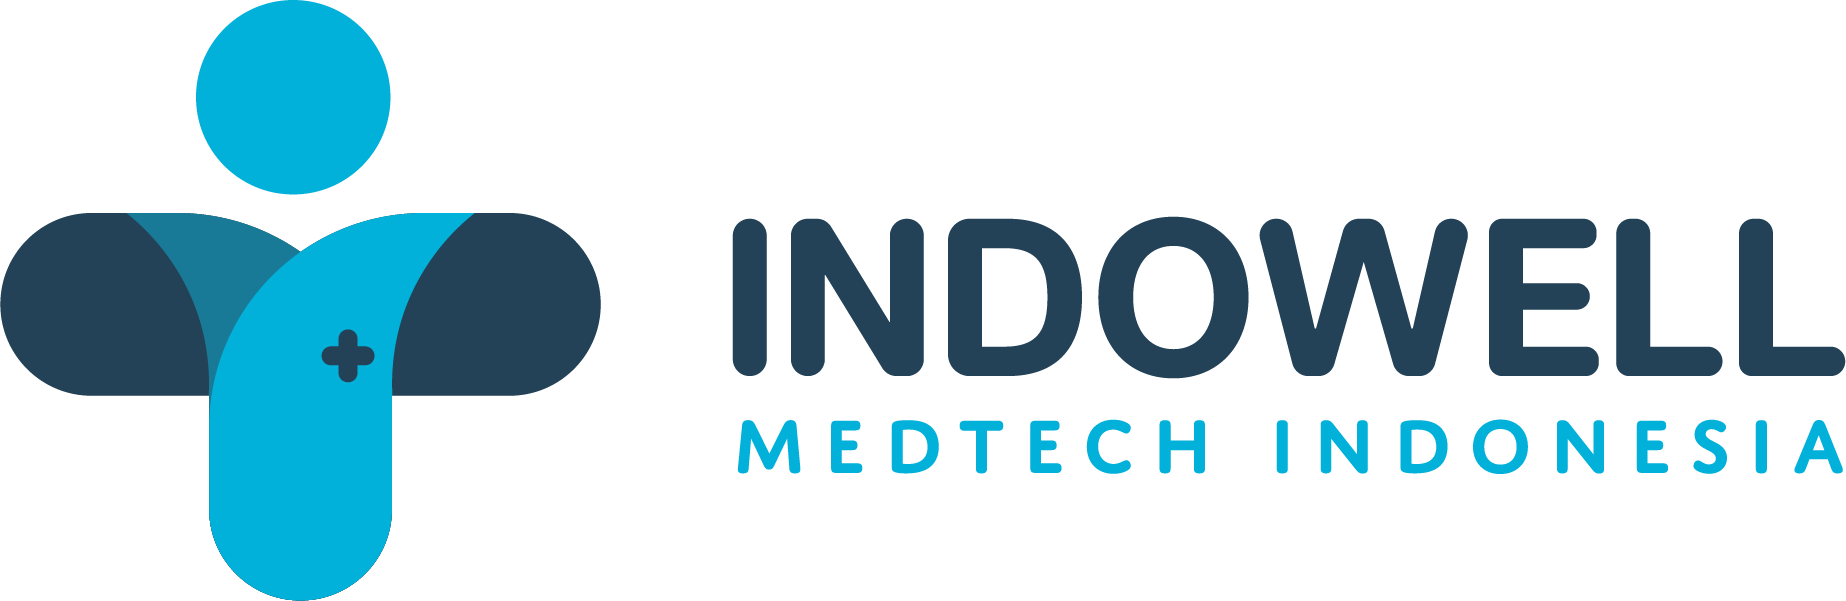 Indowell Meditech Indonesia